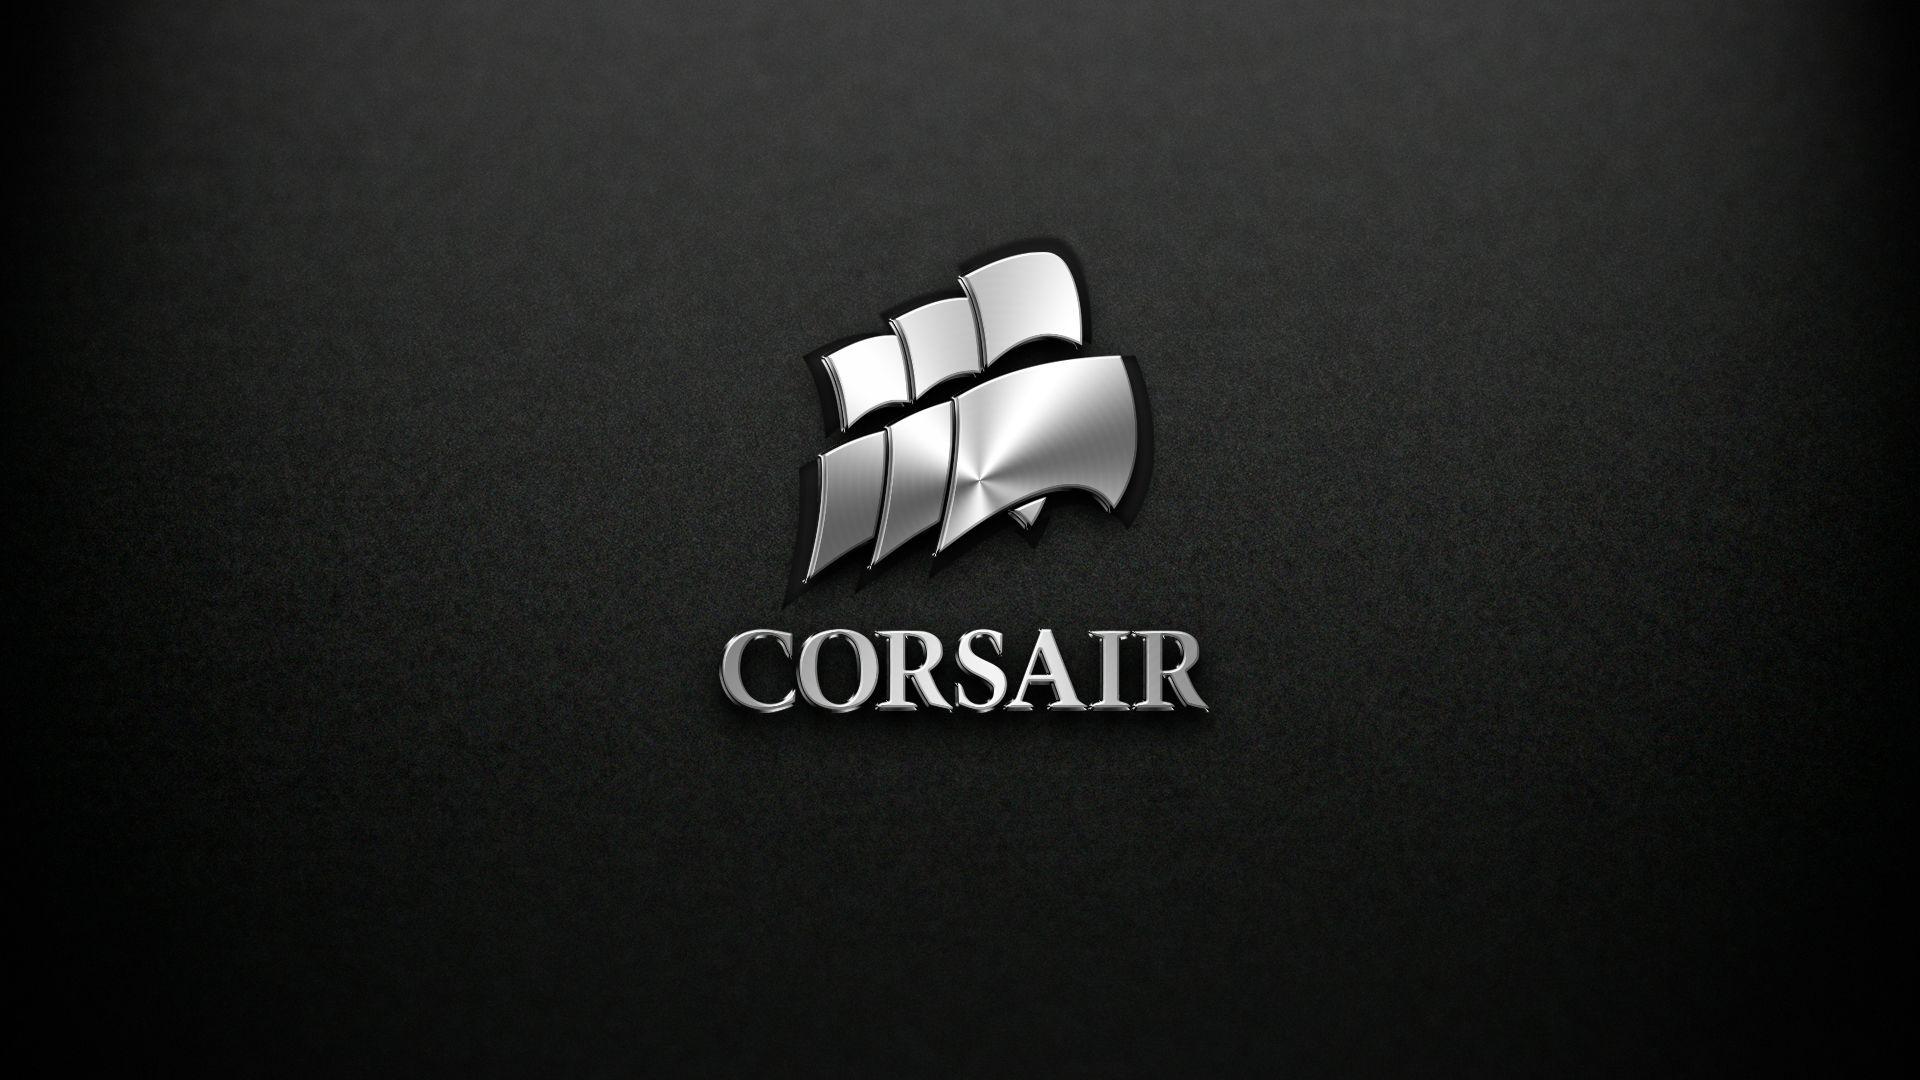 Corsair Logo - Corsair to Change Tramp Stamp Back to Previous Logo